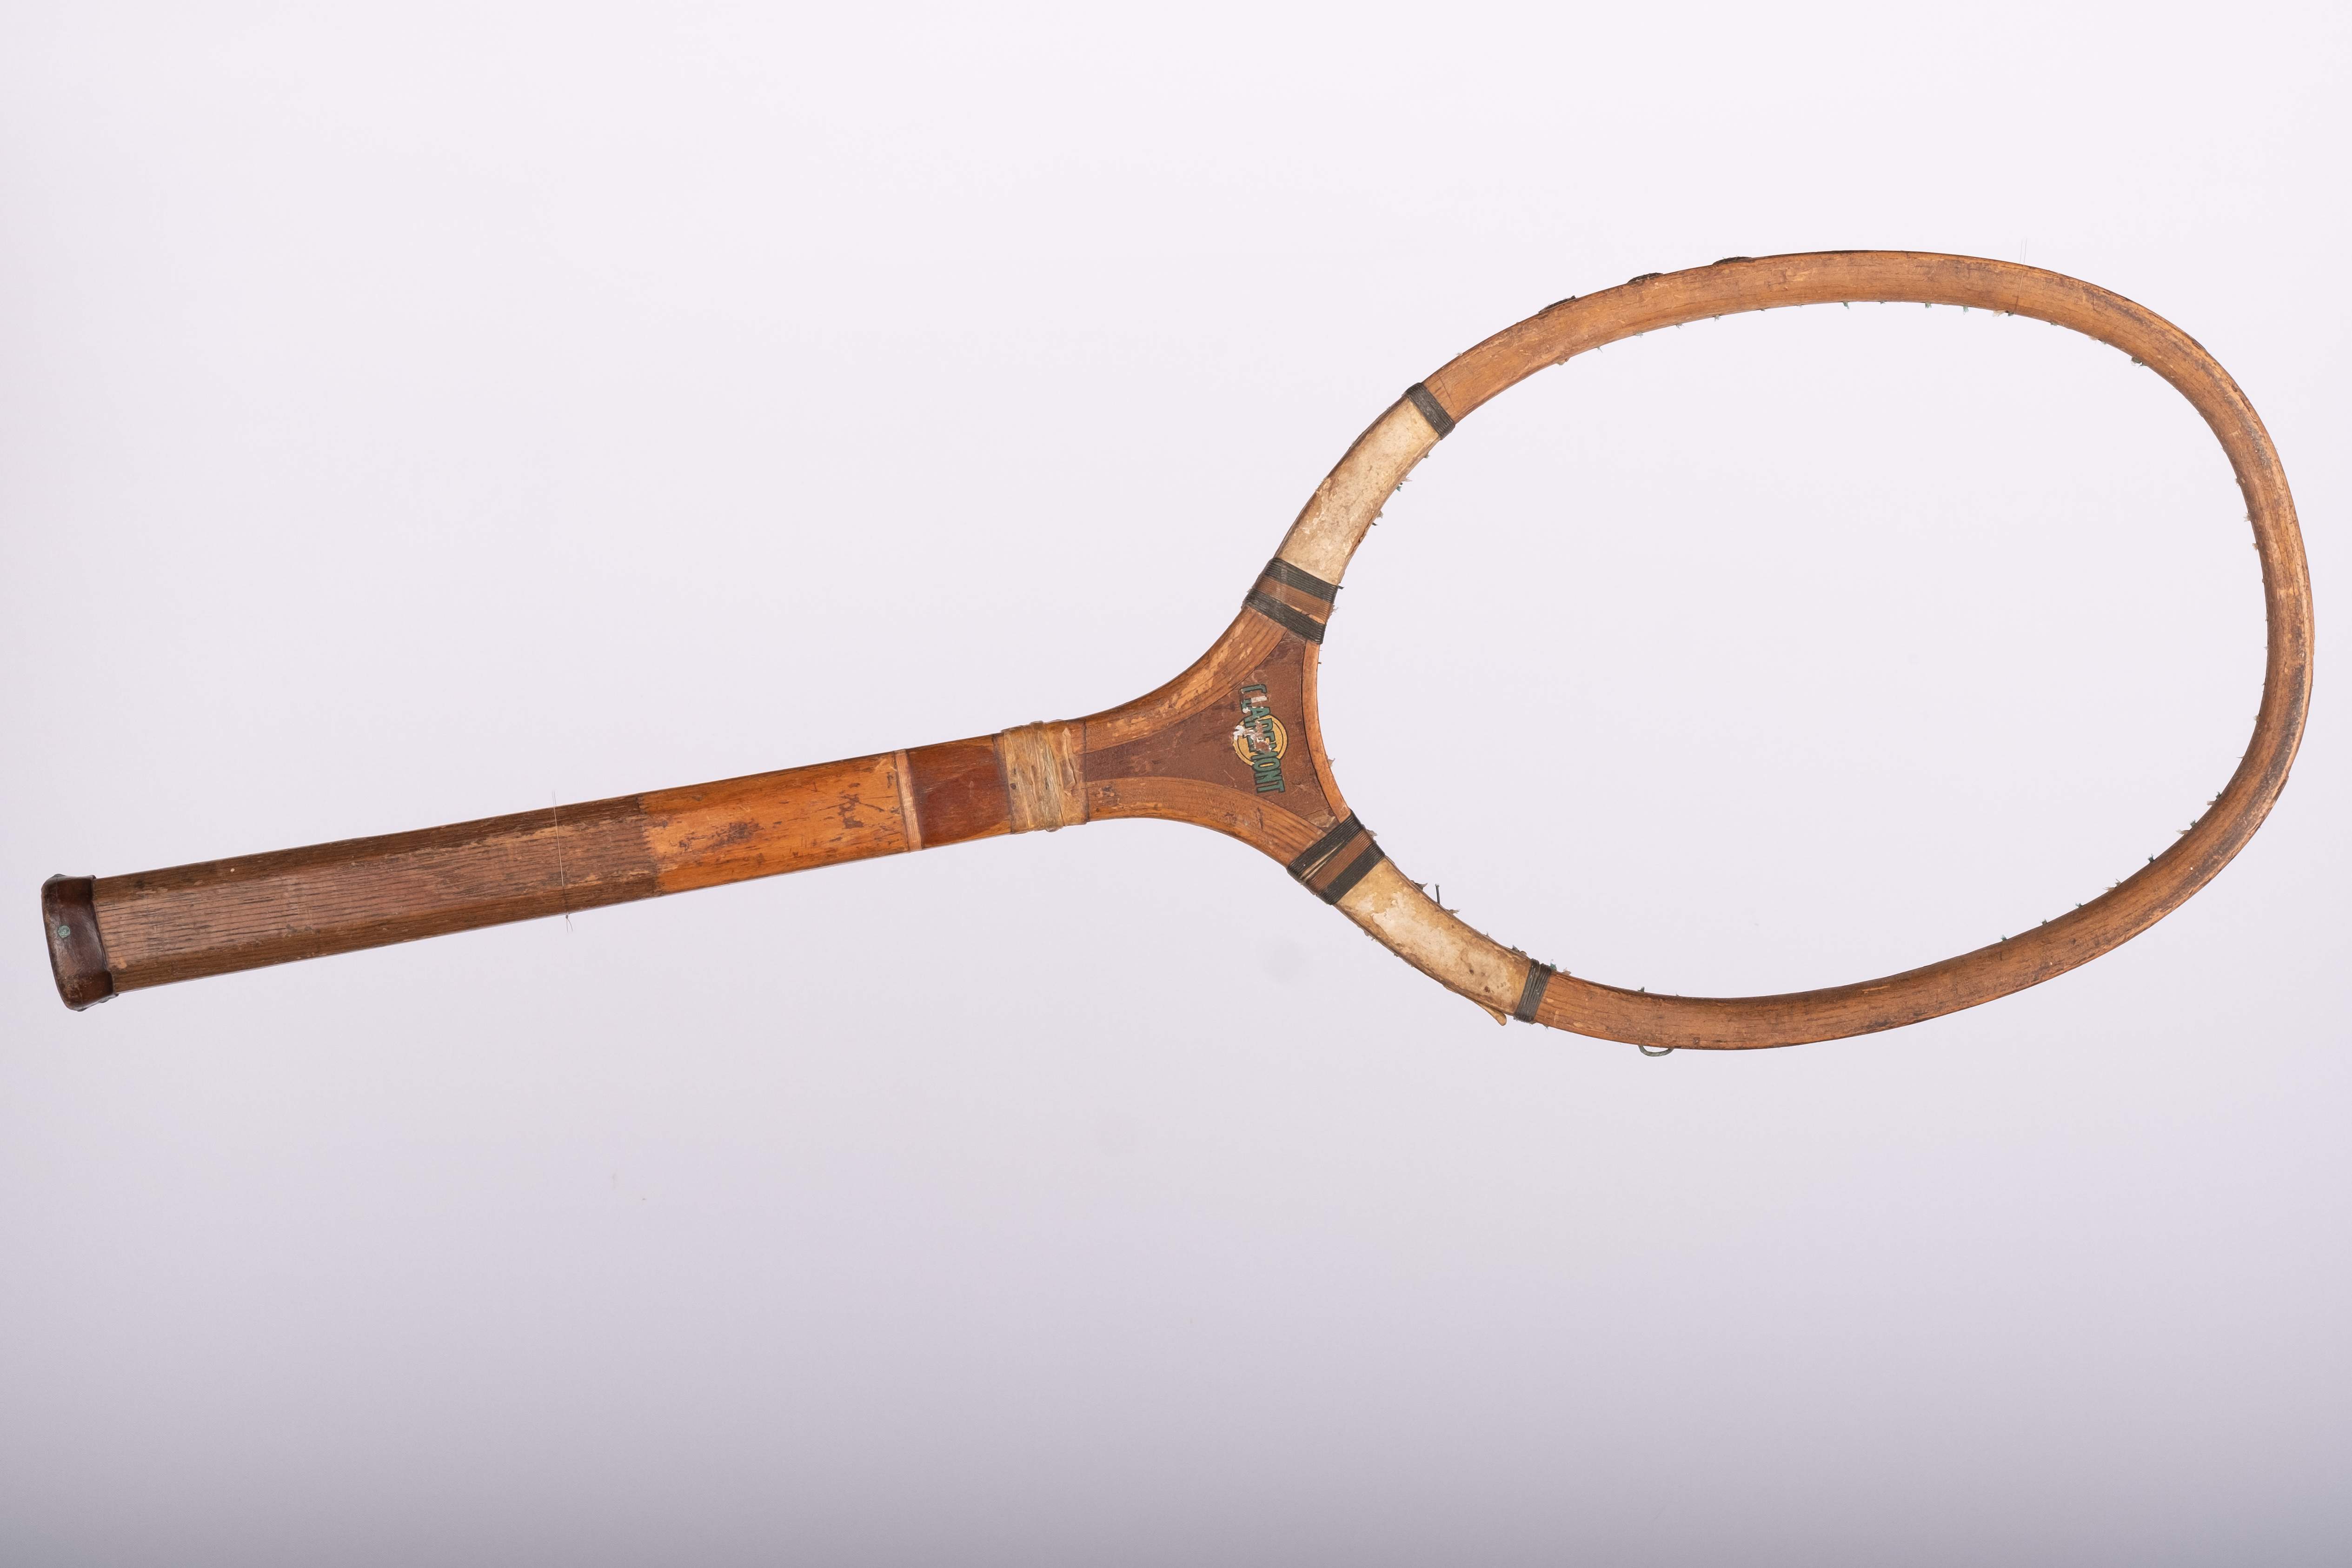 Claremont Tennis Racket